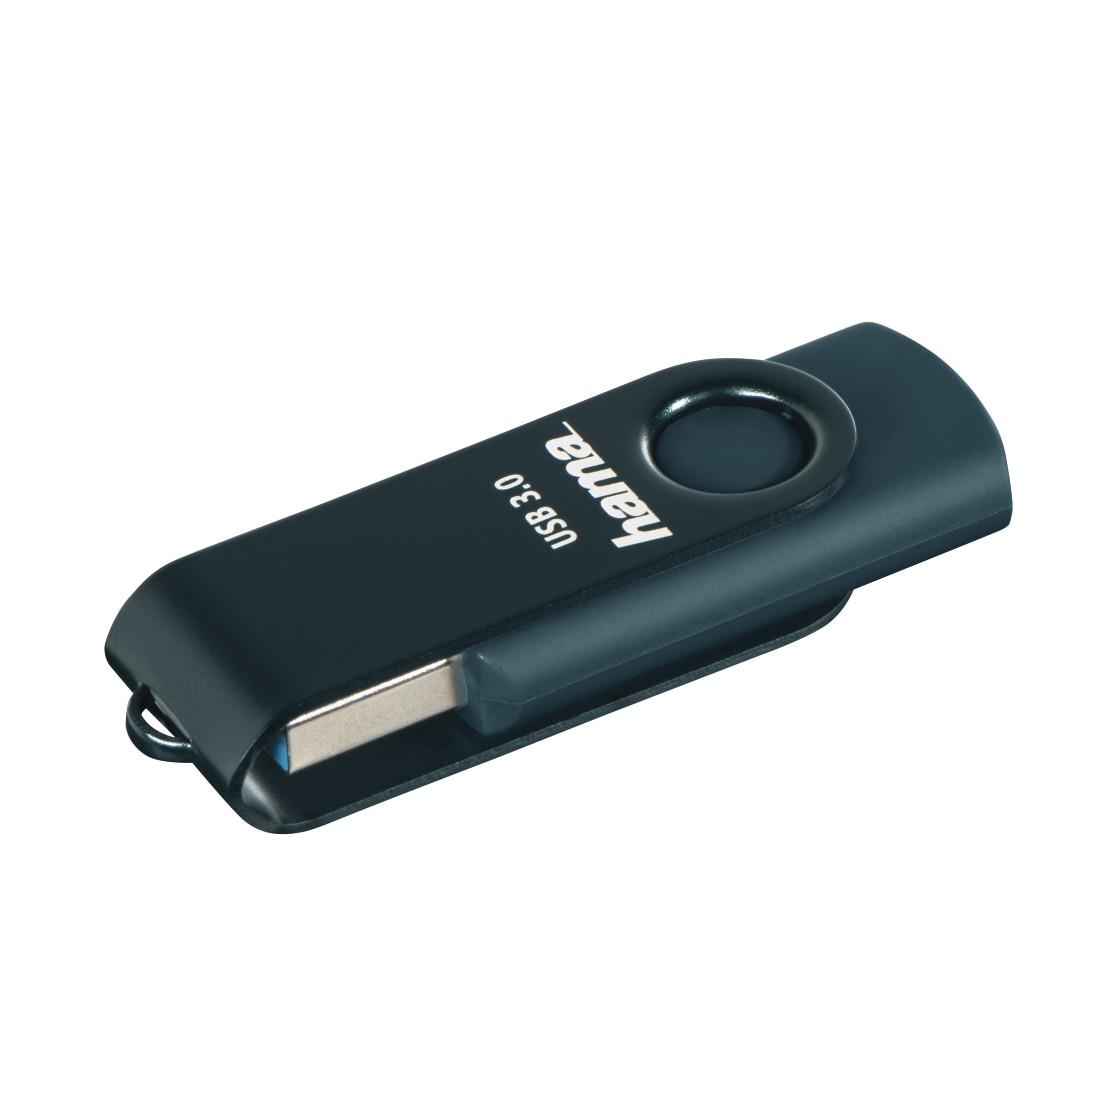 USB памет HAMA Rotate, 64GB, USB 3.0 70 MB/s, Петролно синьо